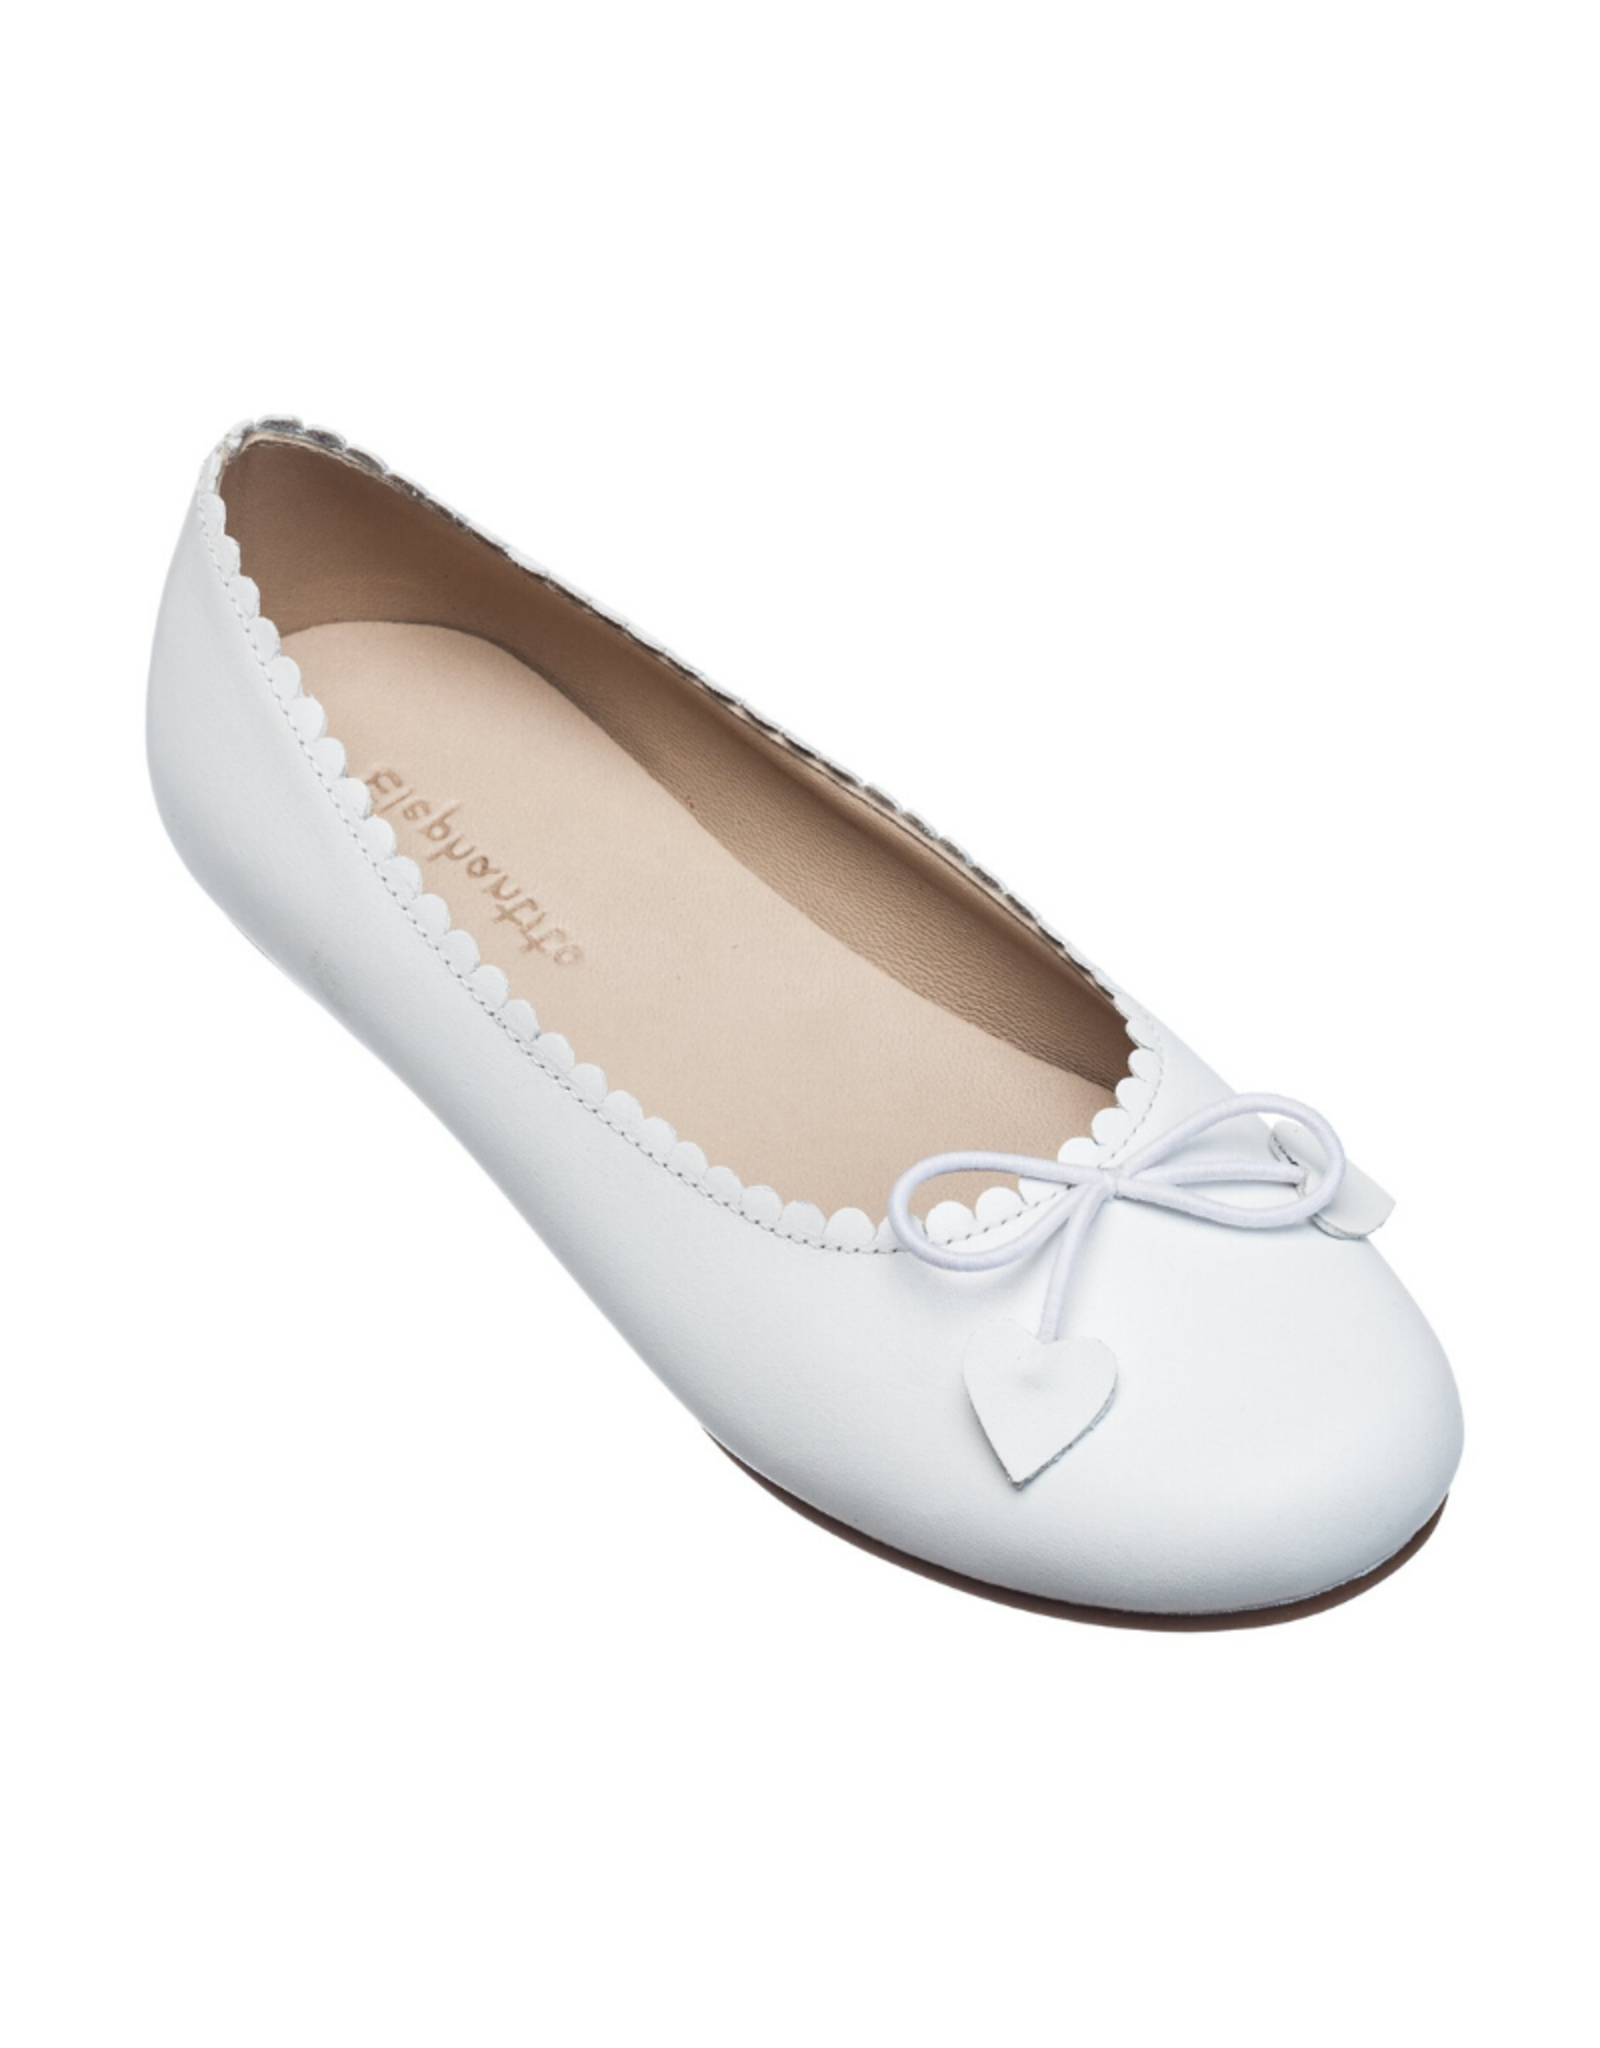 Elephantito White Scalloped Ballerina Shoe